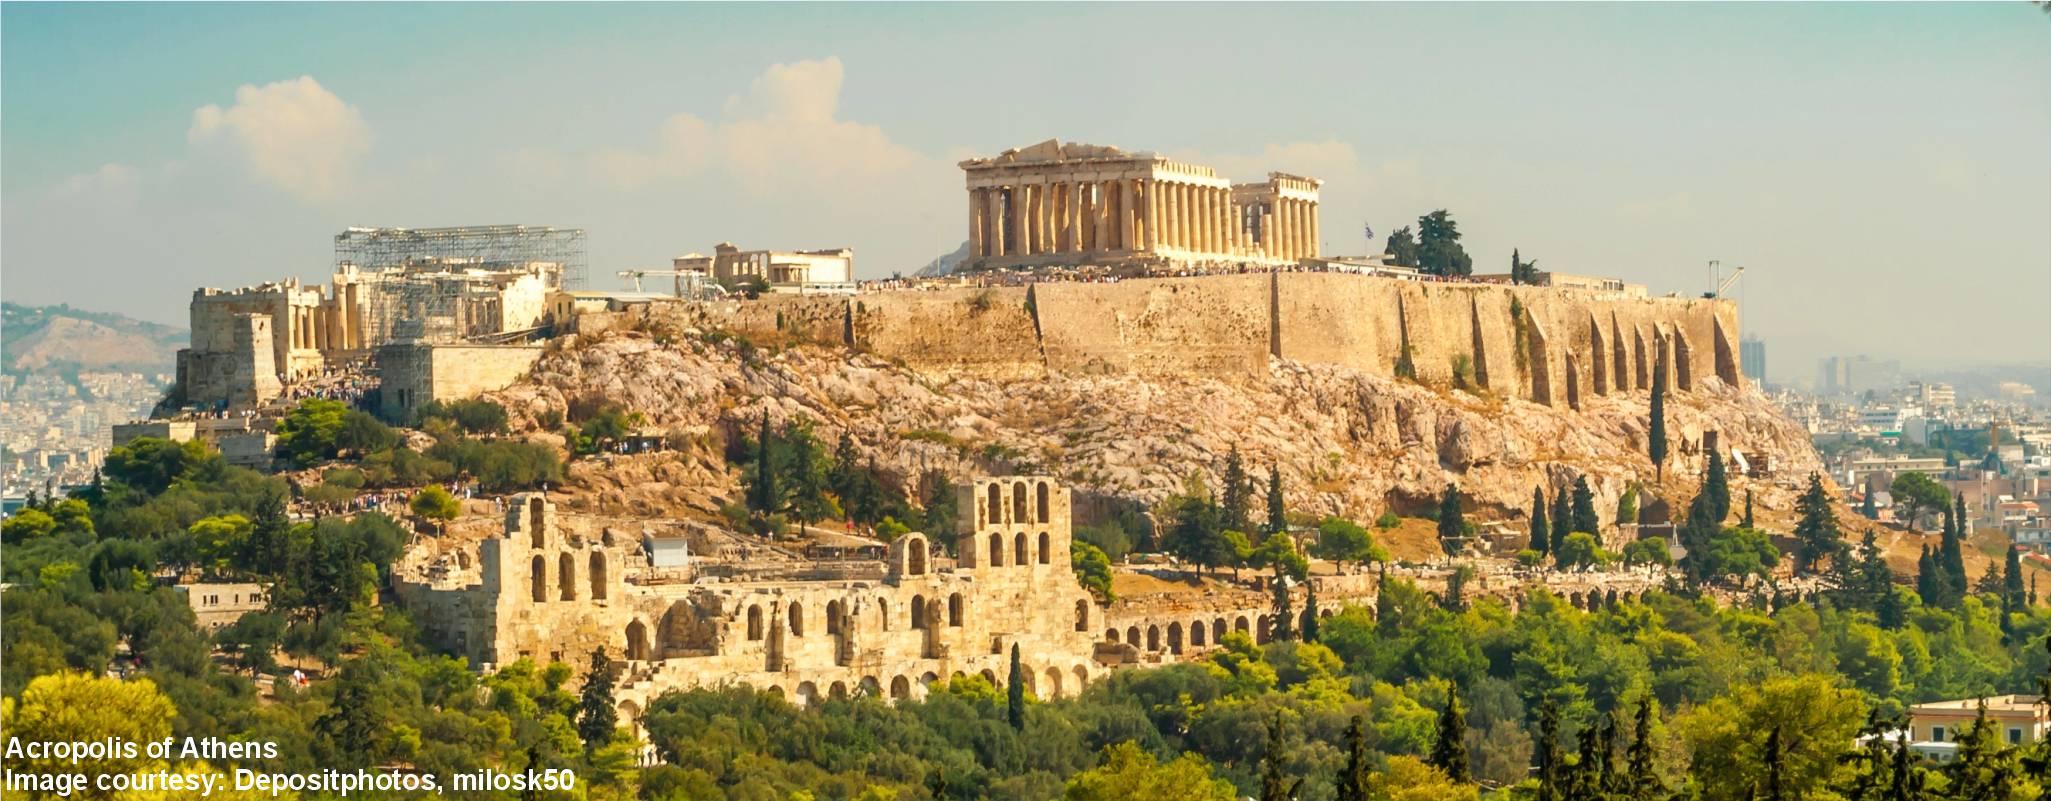 Acropolis of Athens image